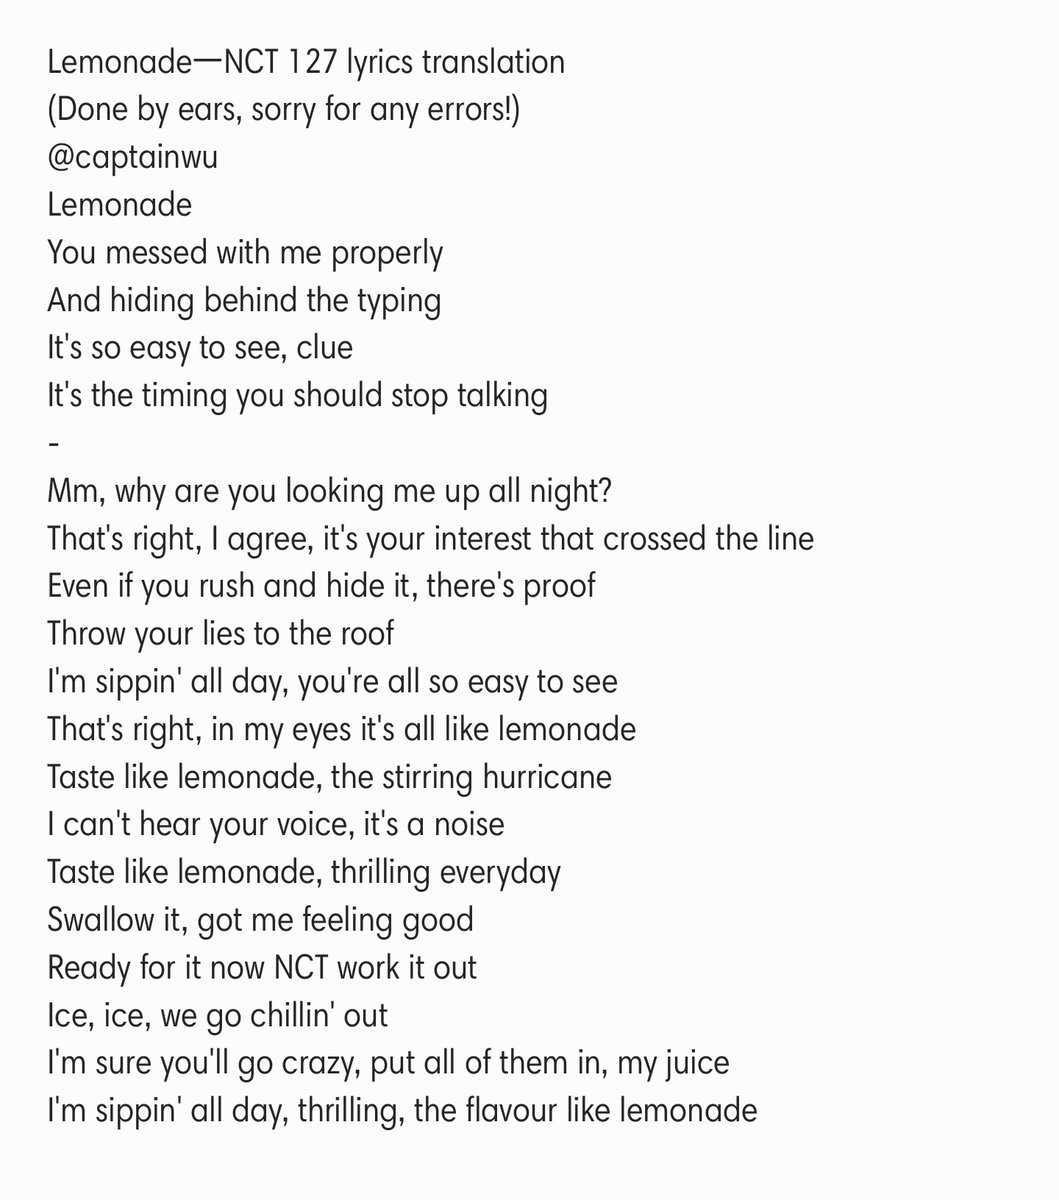 NCT 127 Lemonade Lyrics (엔씨티 127 Lemonade 가사) (Color Coded